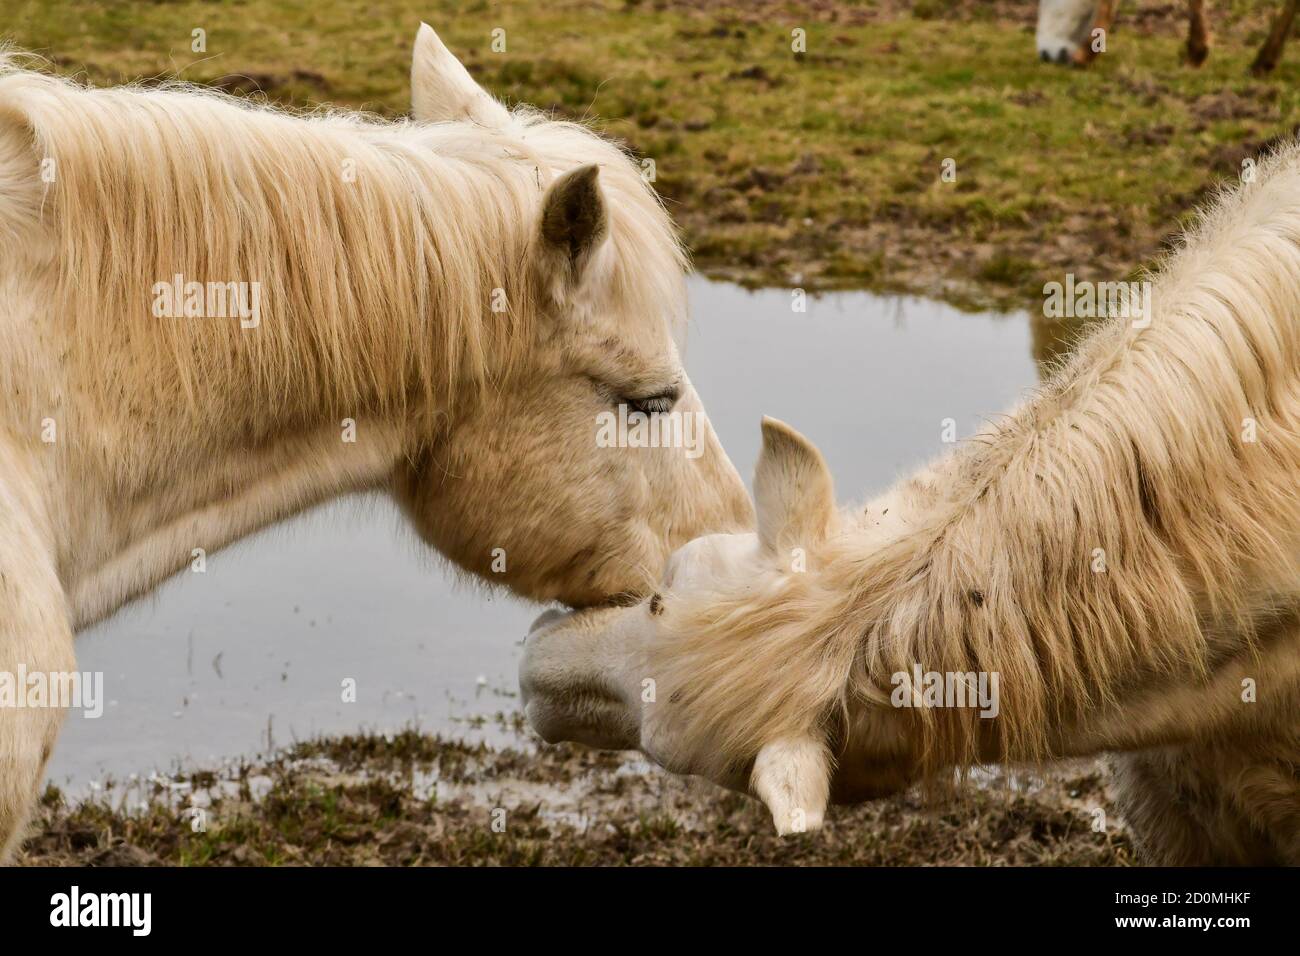 Cavallo bianco allo stato brado Foto de stock